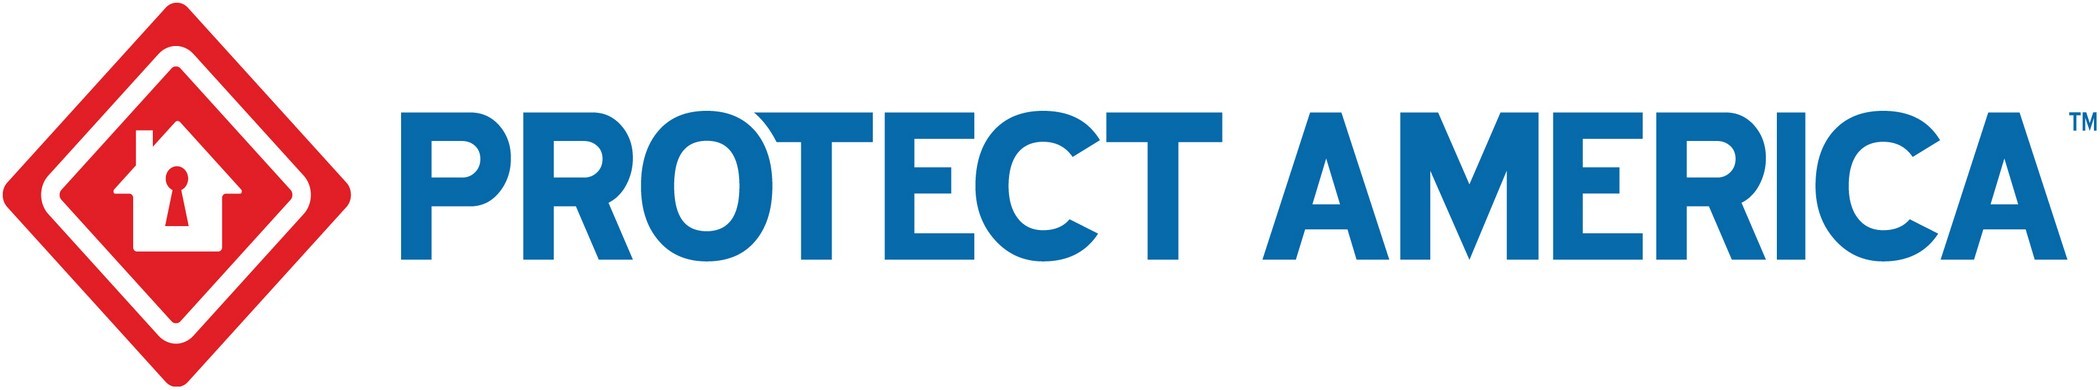 Protect America Logo [EPS]